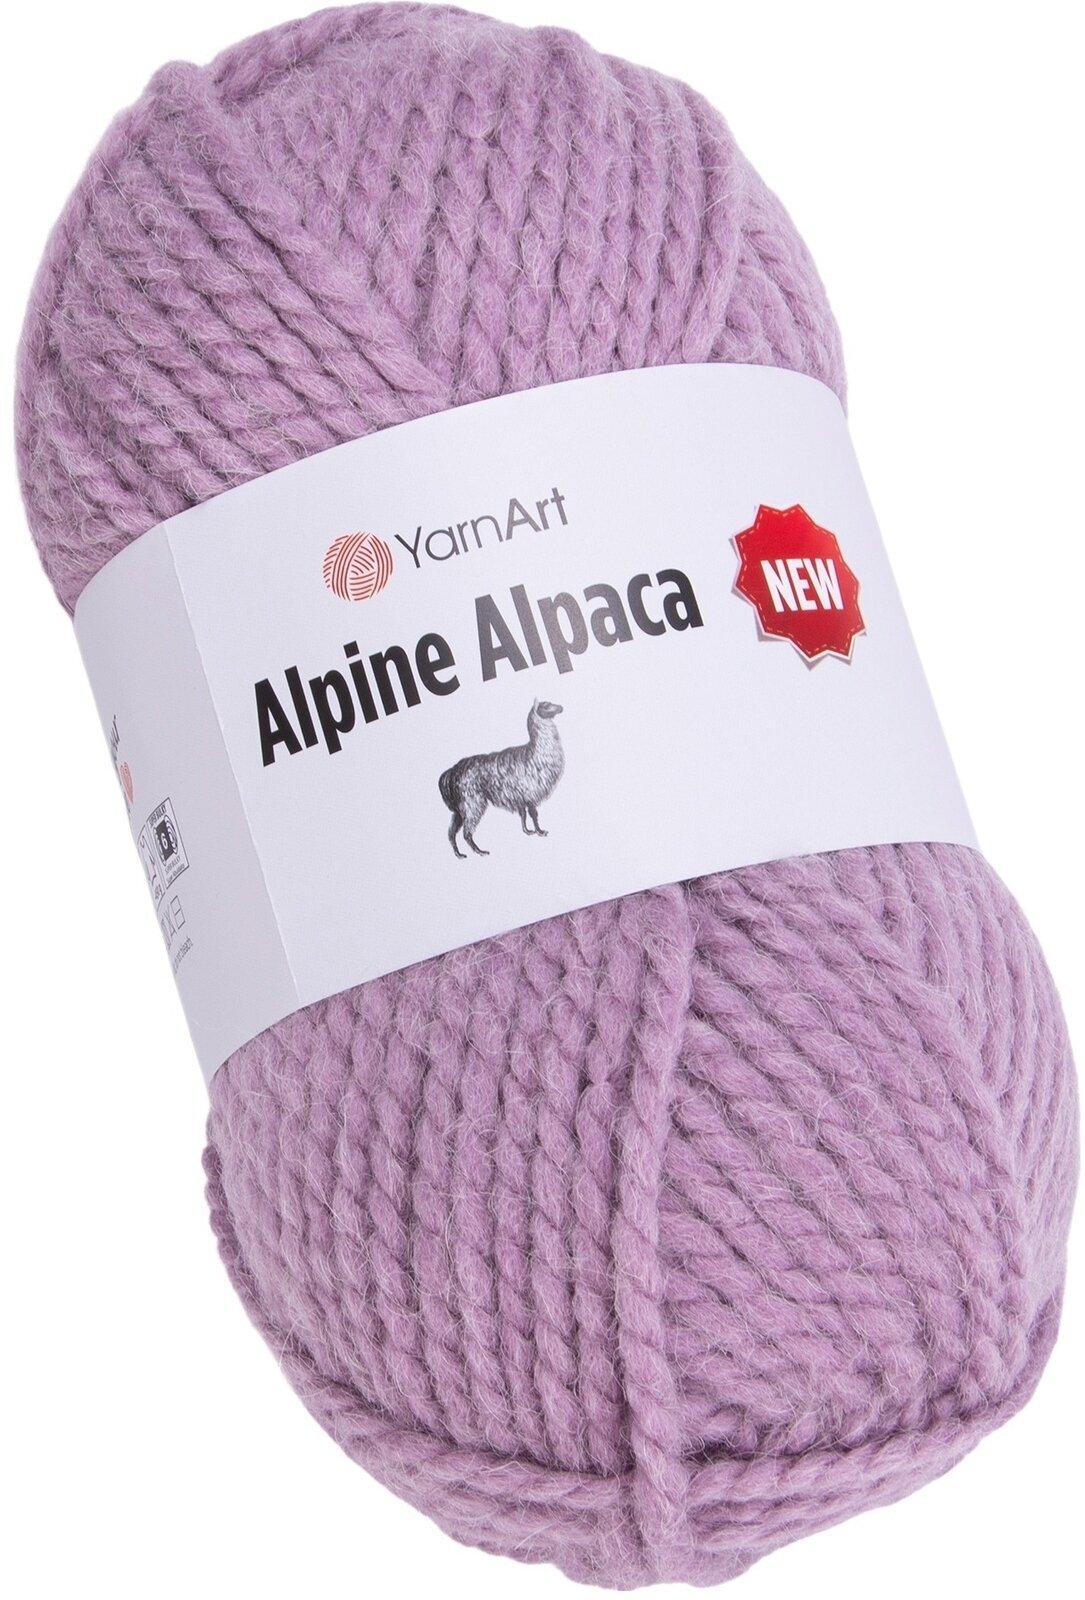 Stickgarn Yarn Art Alpine Alpaca 1443